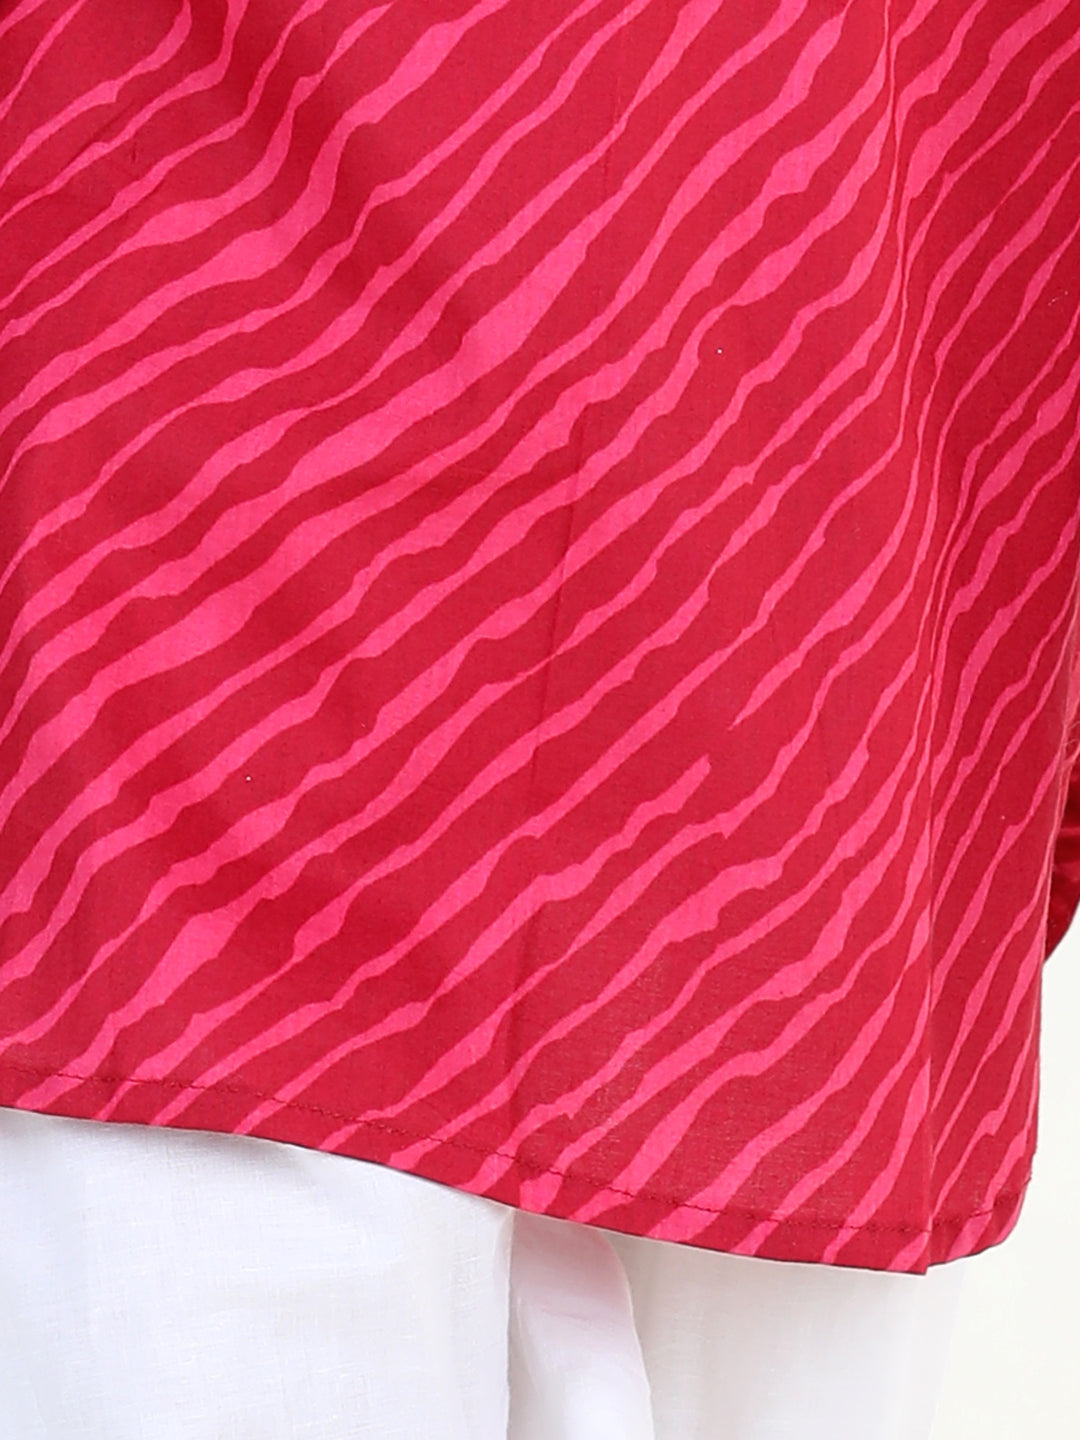 BownBee Printed Cotton Full Sleeve Pathani Salwar Set for Boys- Pink